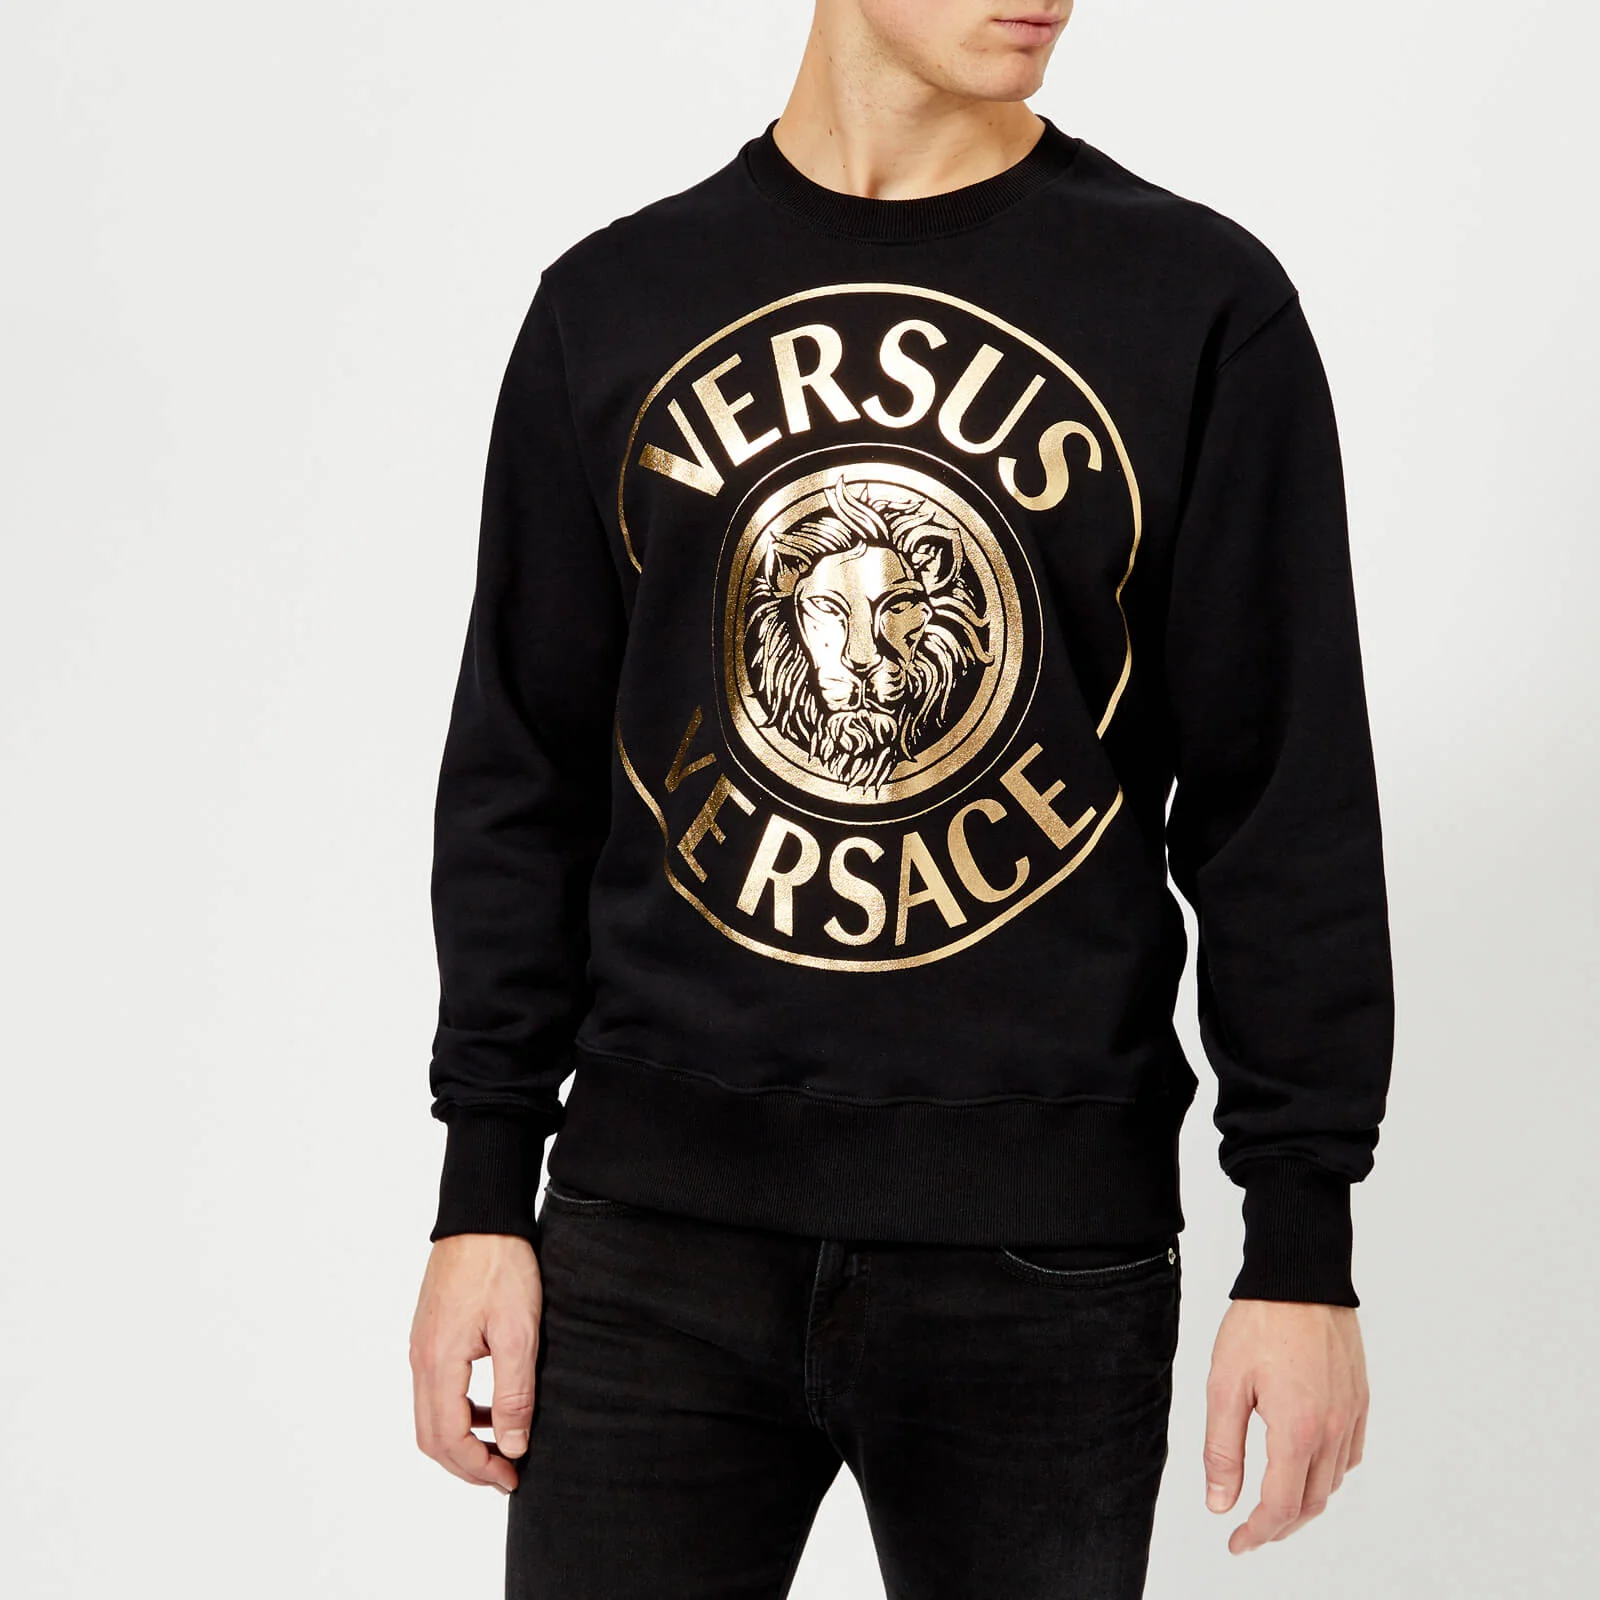 Versus Versace Men's Round Logo Printed Sweatshirt - Black/Gold Image 1